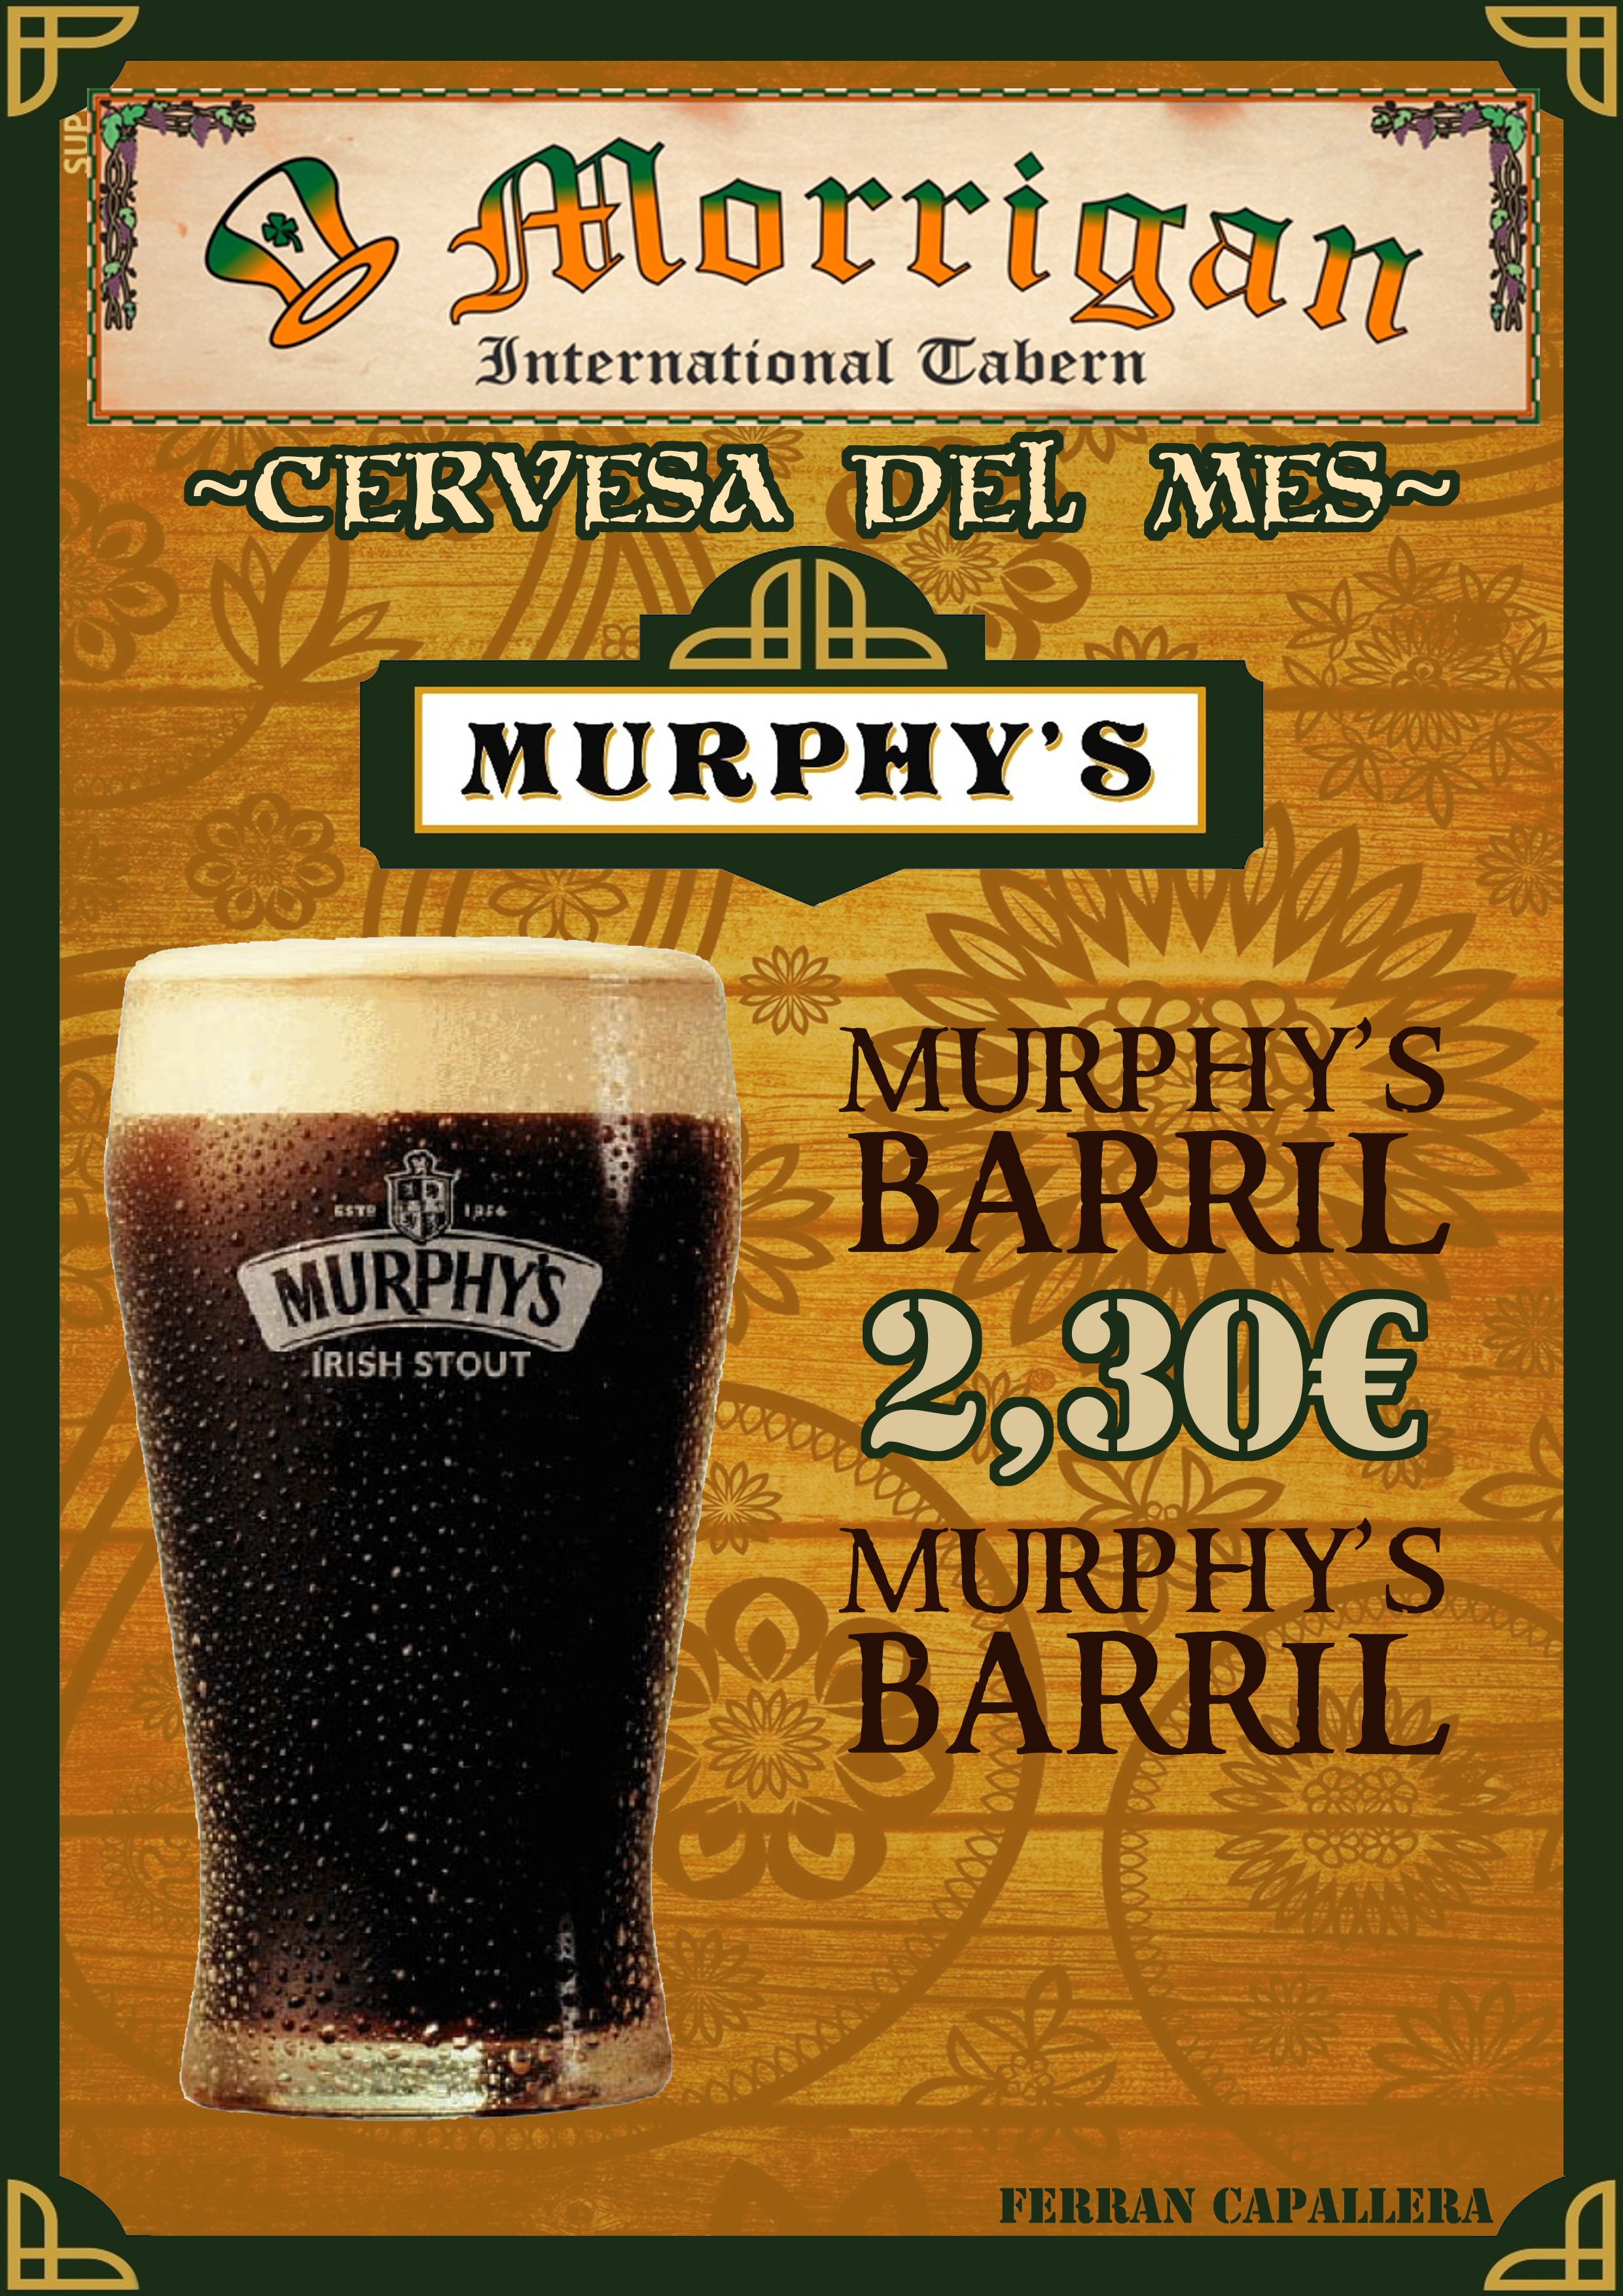 Cervesa del mes Murphy's de Barril Figueres Girona